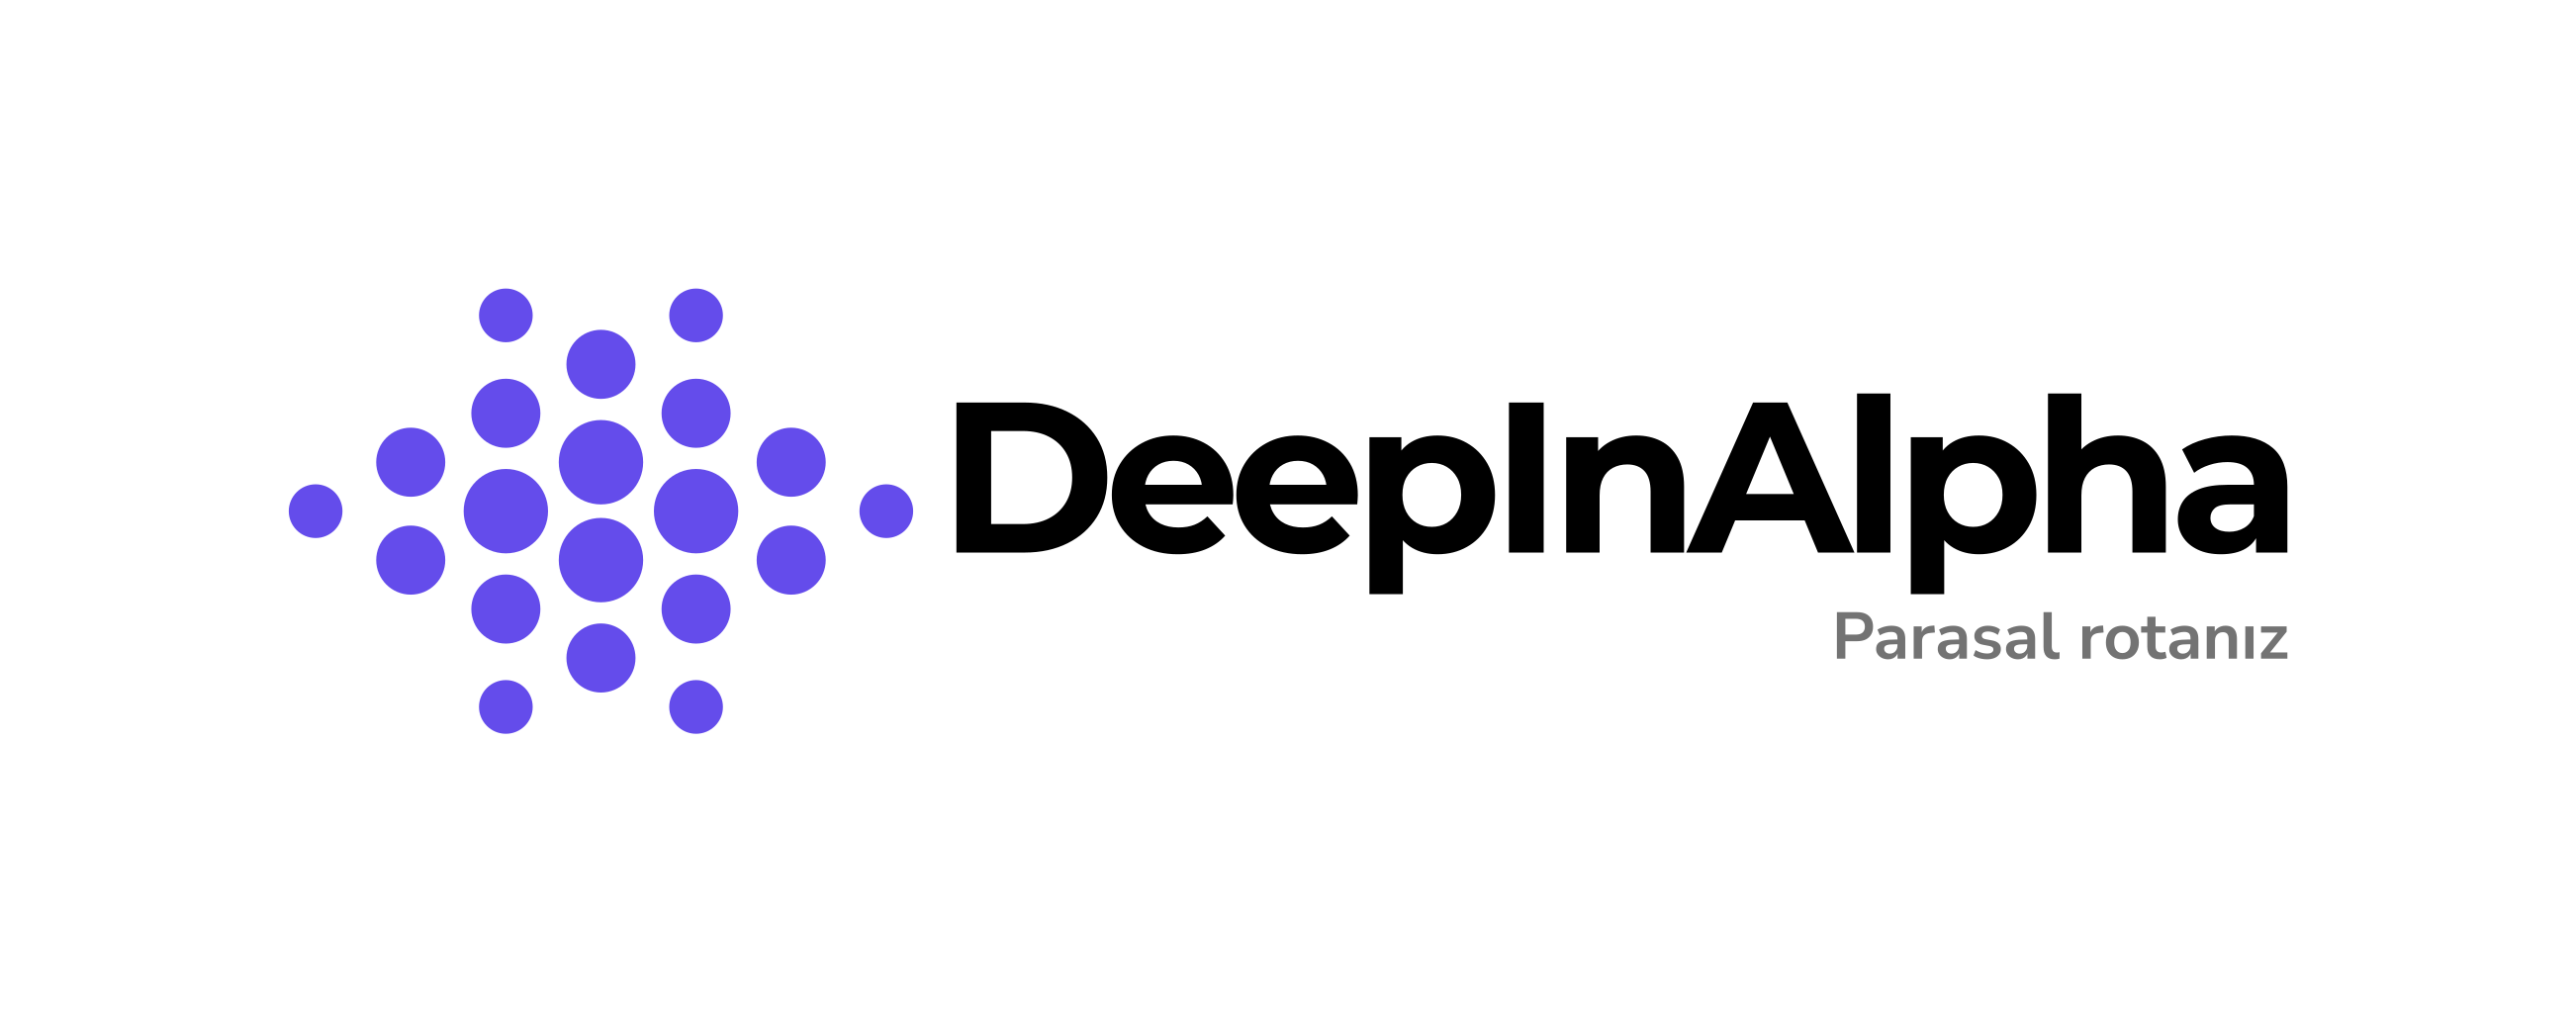 Deepinlapha web site orjinal logo